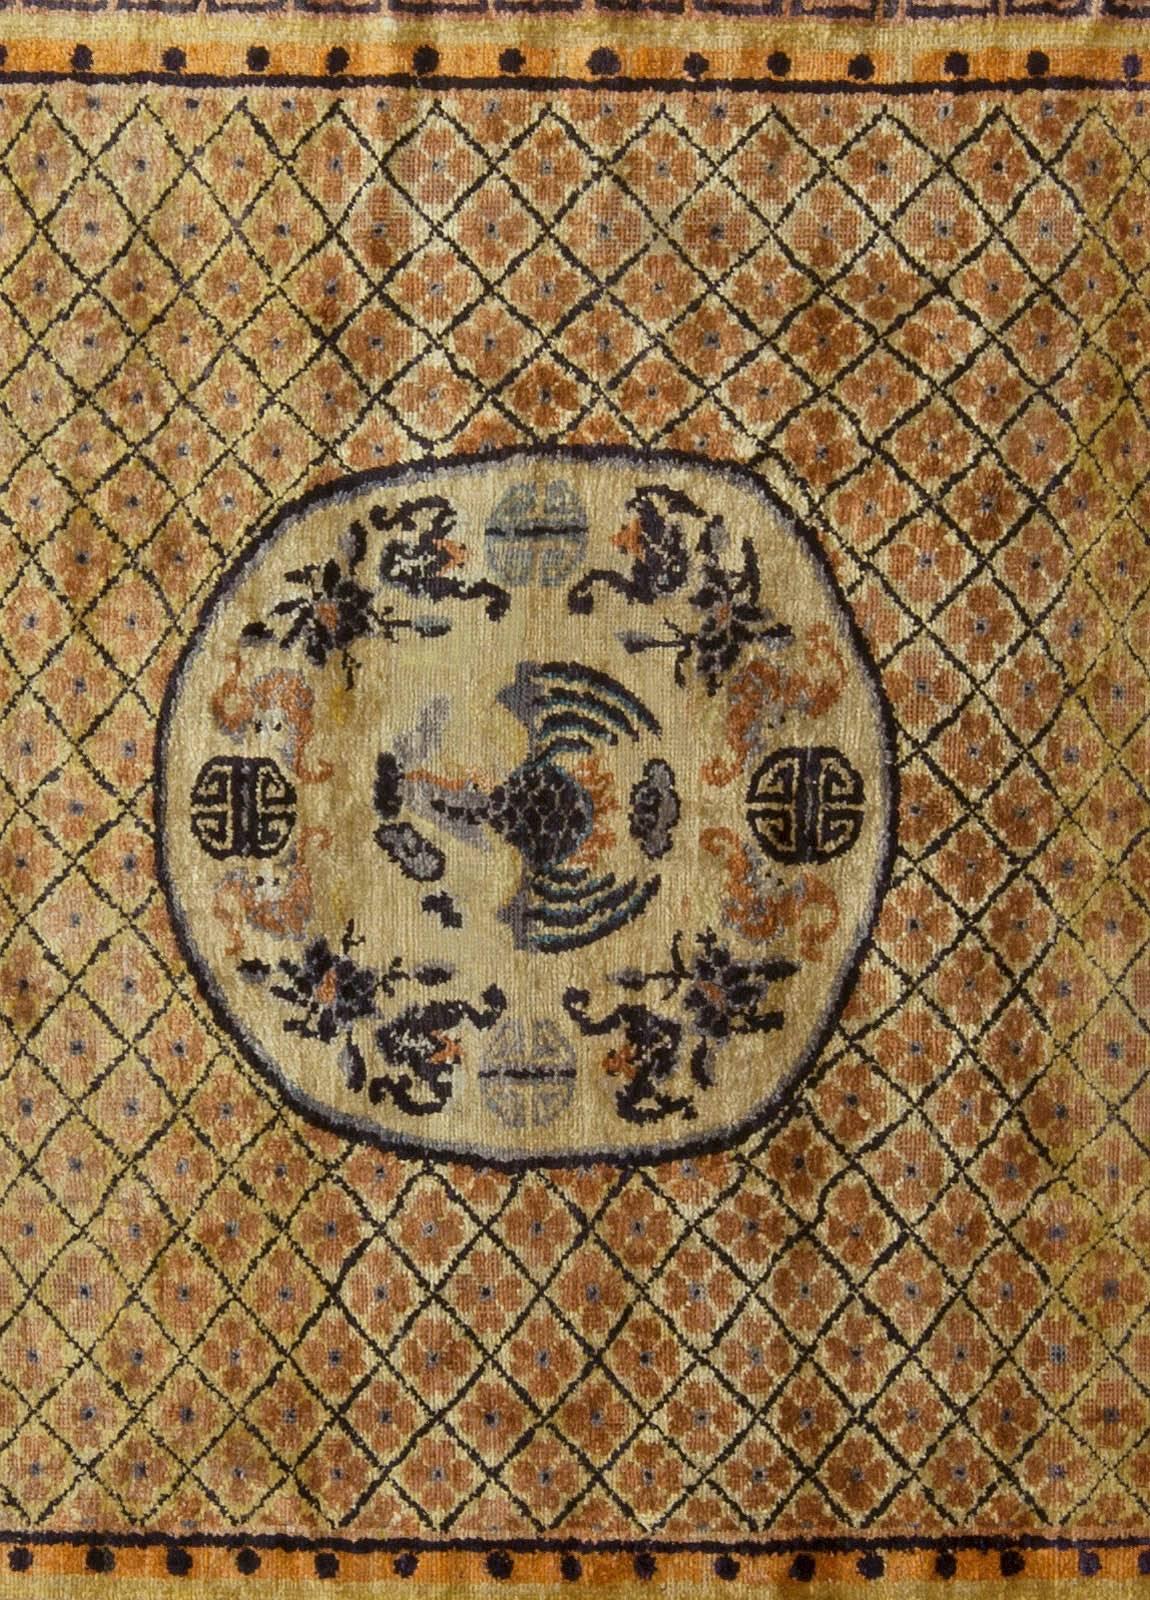 Vintage Chinese Oriental silk rug 
Size: 6'0